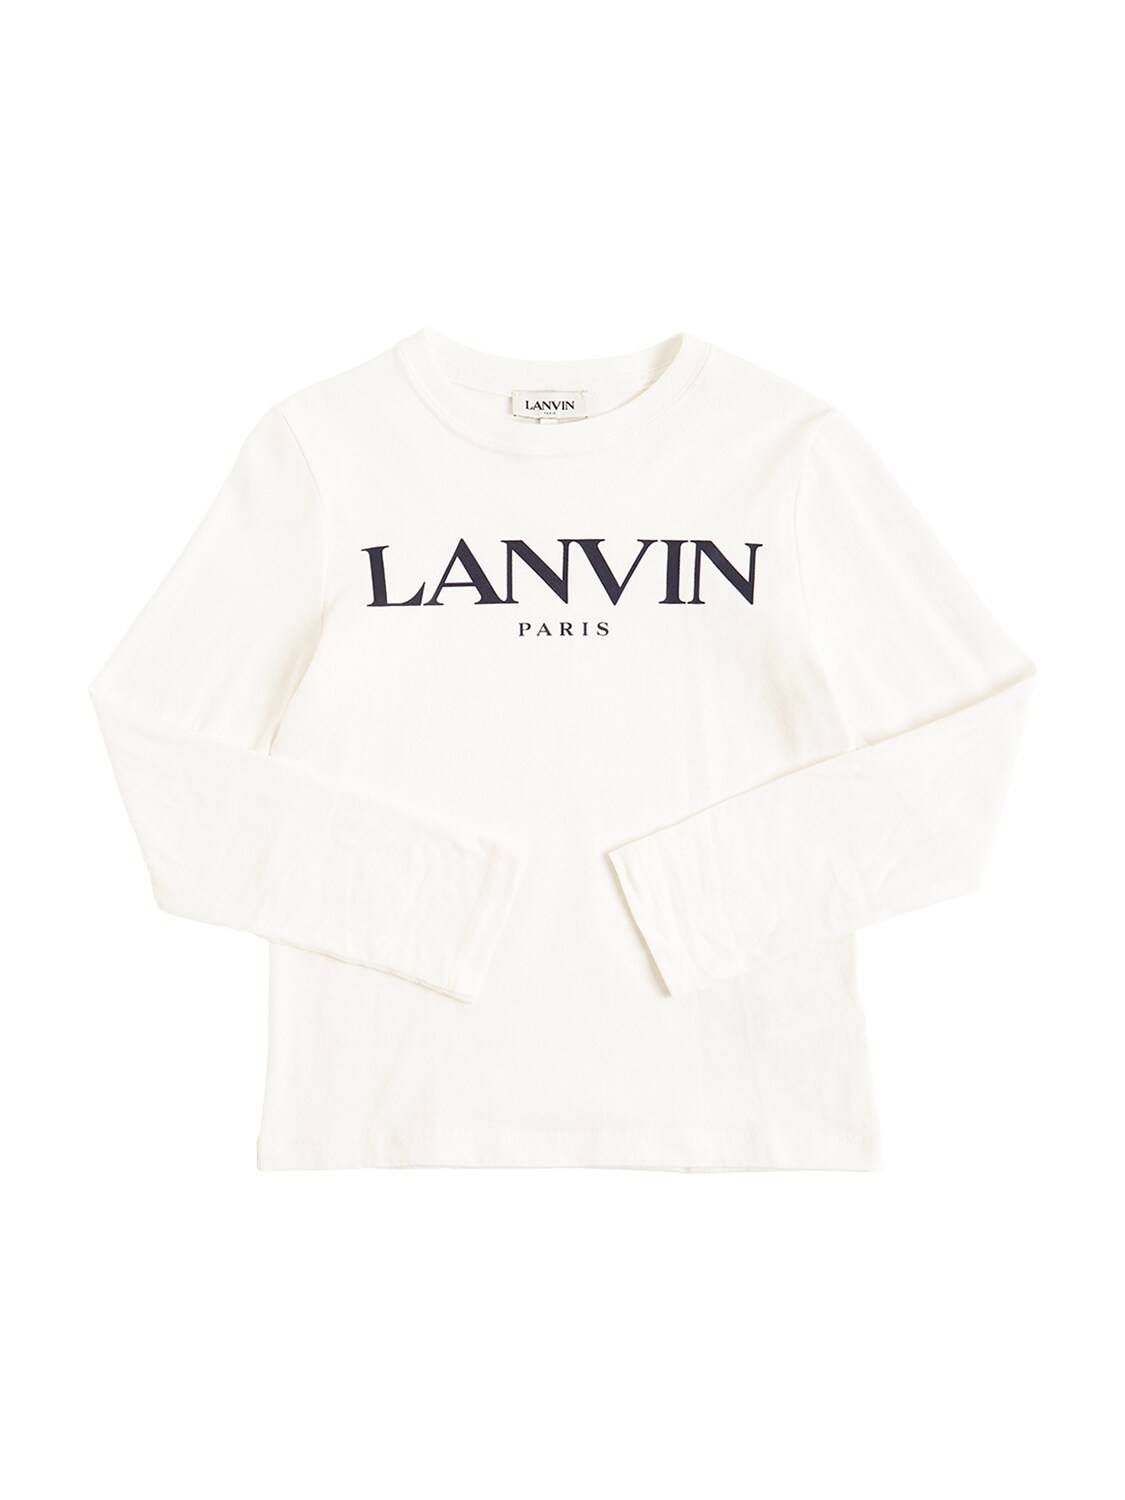 LANVIN Clothing for Boys | ModeSens